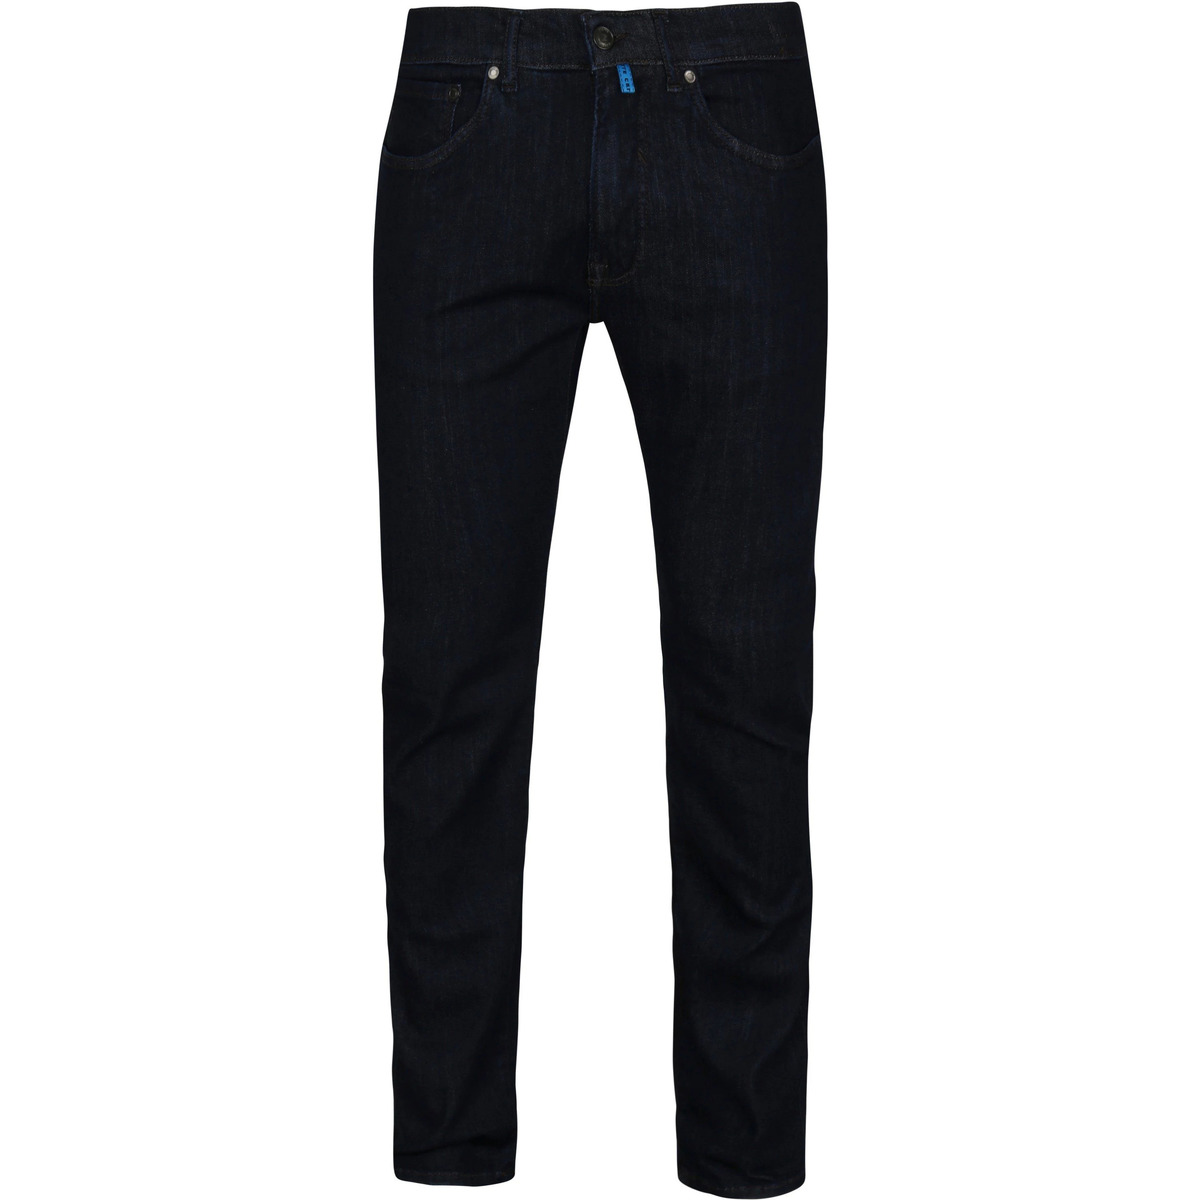 Pierre Cardin Bleu 5 Pocket Jeans Antibes Bleu Foncé Fj